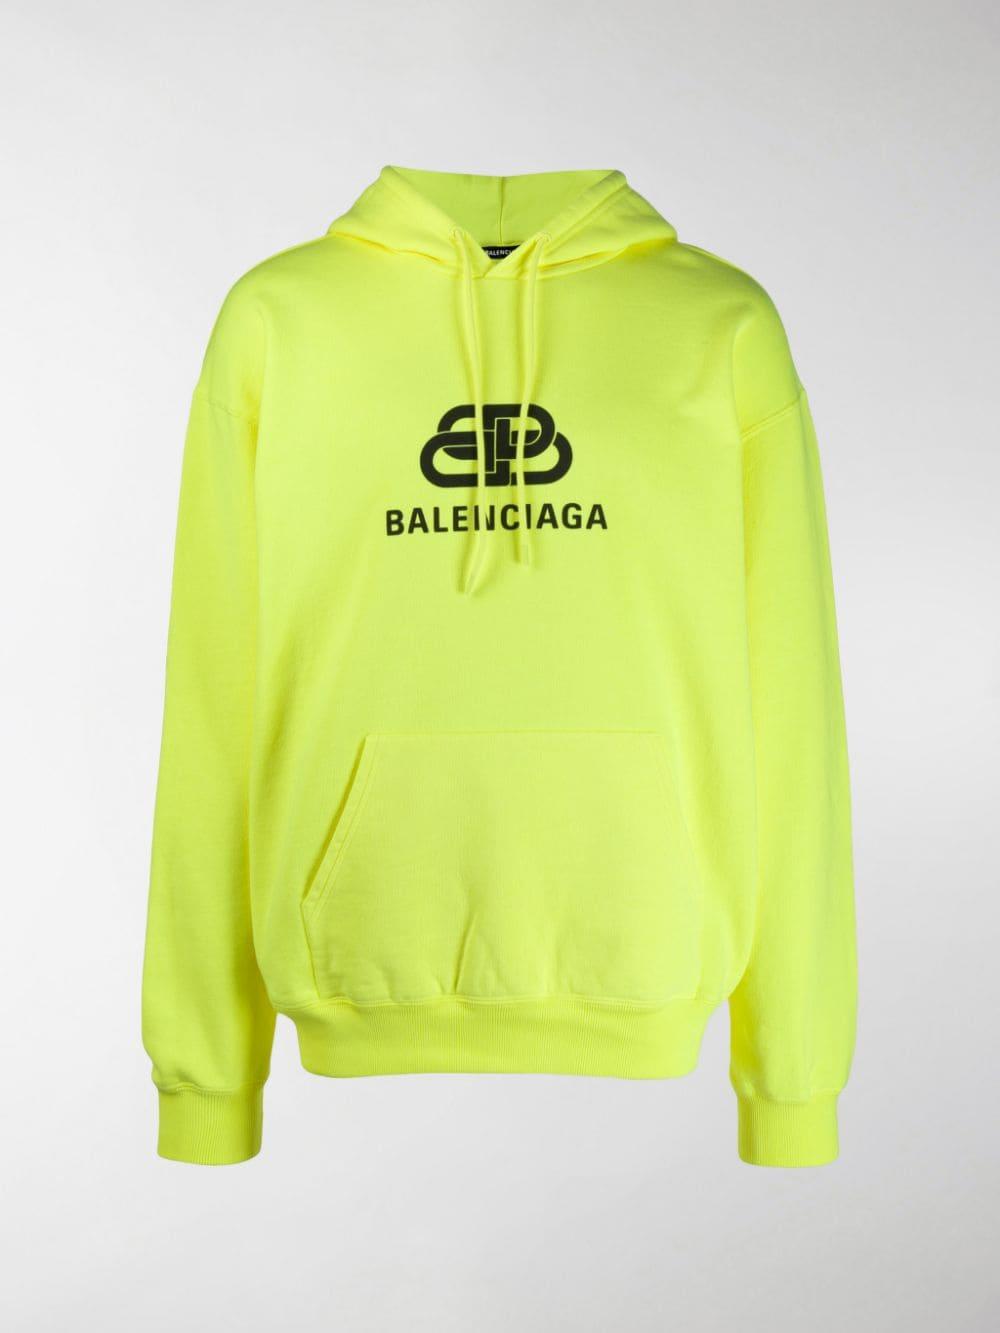 Balenciaga Neon Sweatshirt Hotsell, 51% OFF | ilikepinga.com